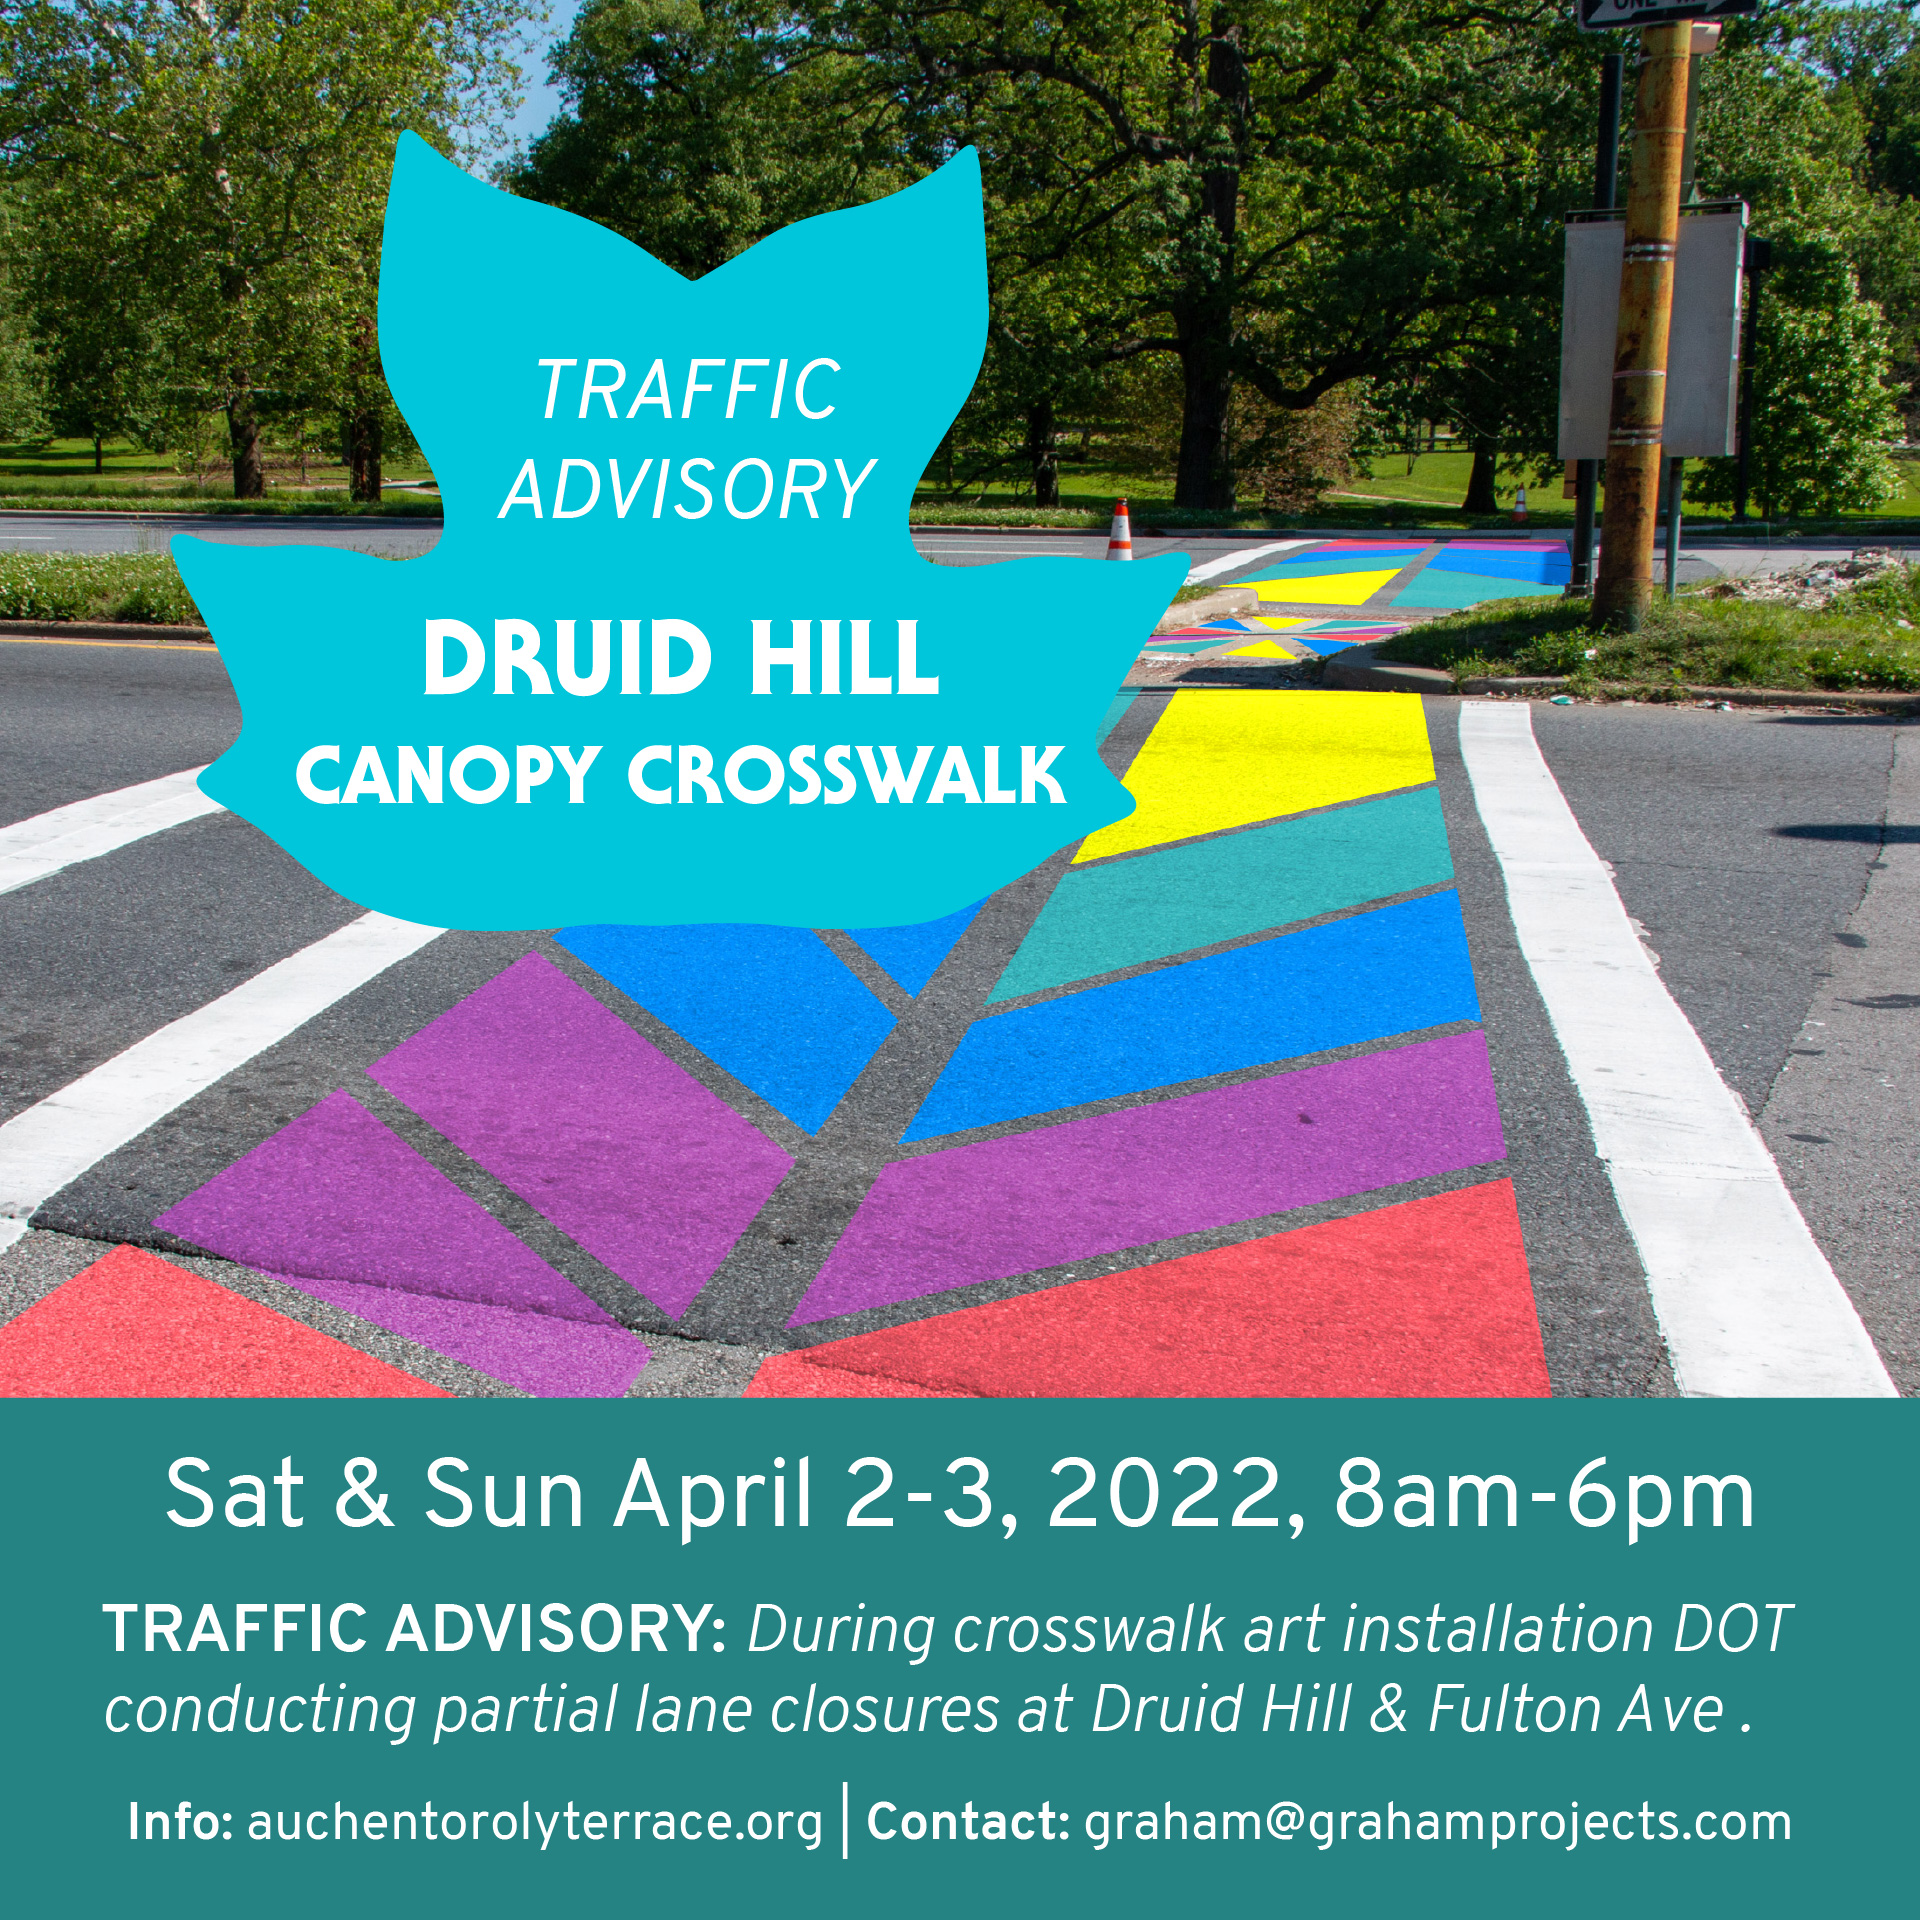 DHCC Install Traffic Advisory April 2-3 2022